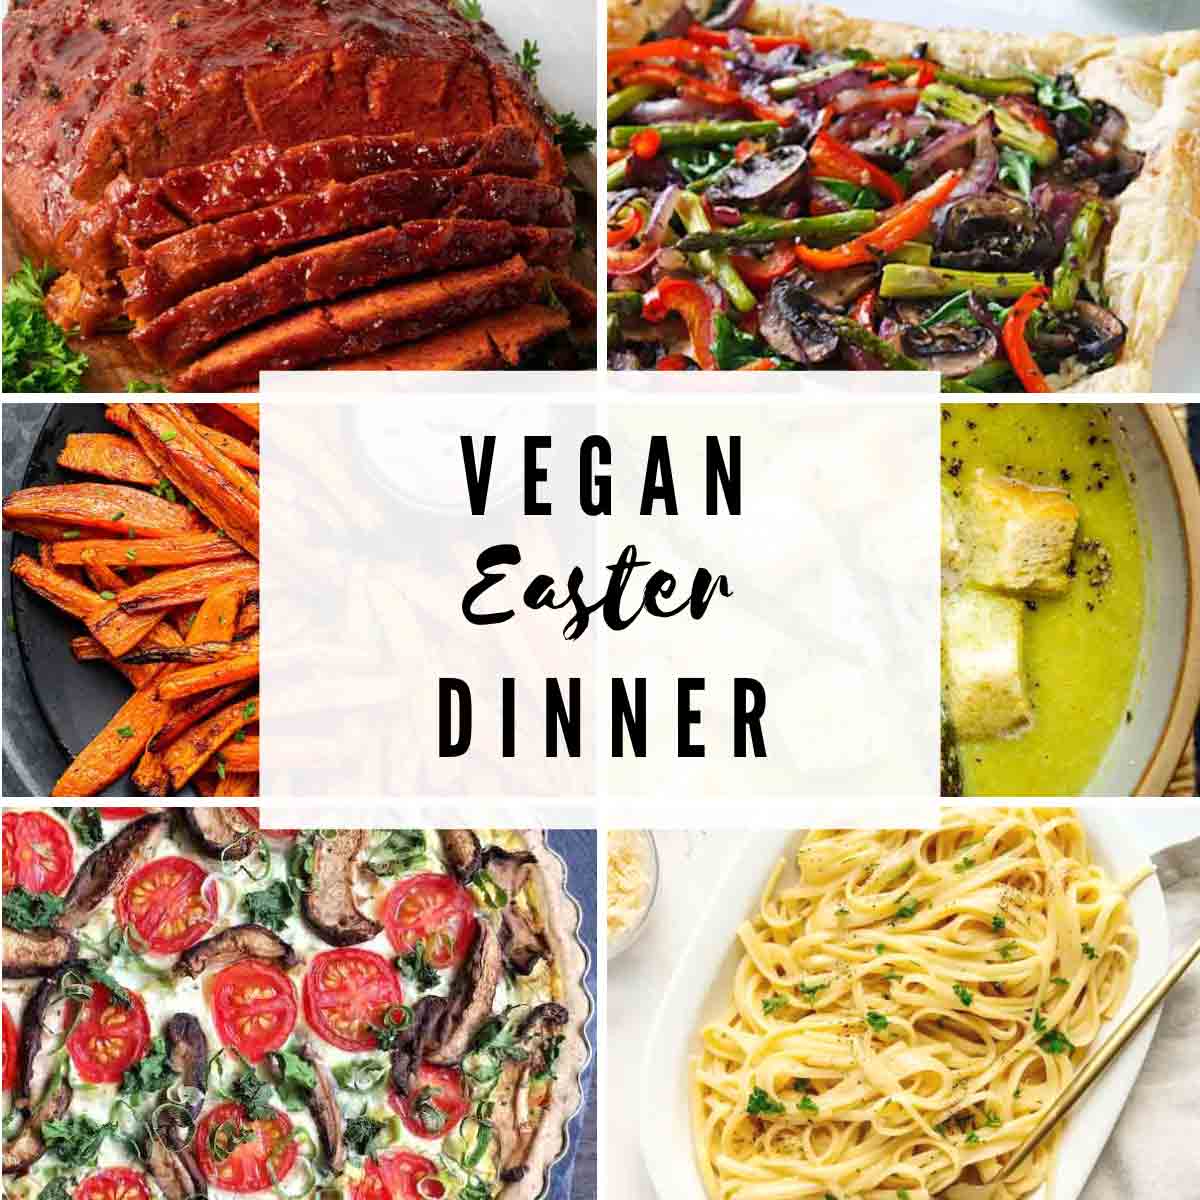 Image Collage Of Vegan Easter Dinner Food